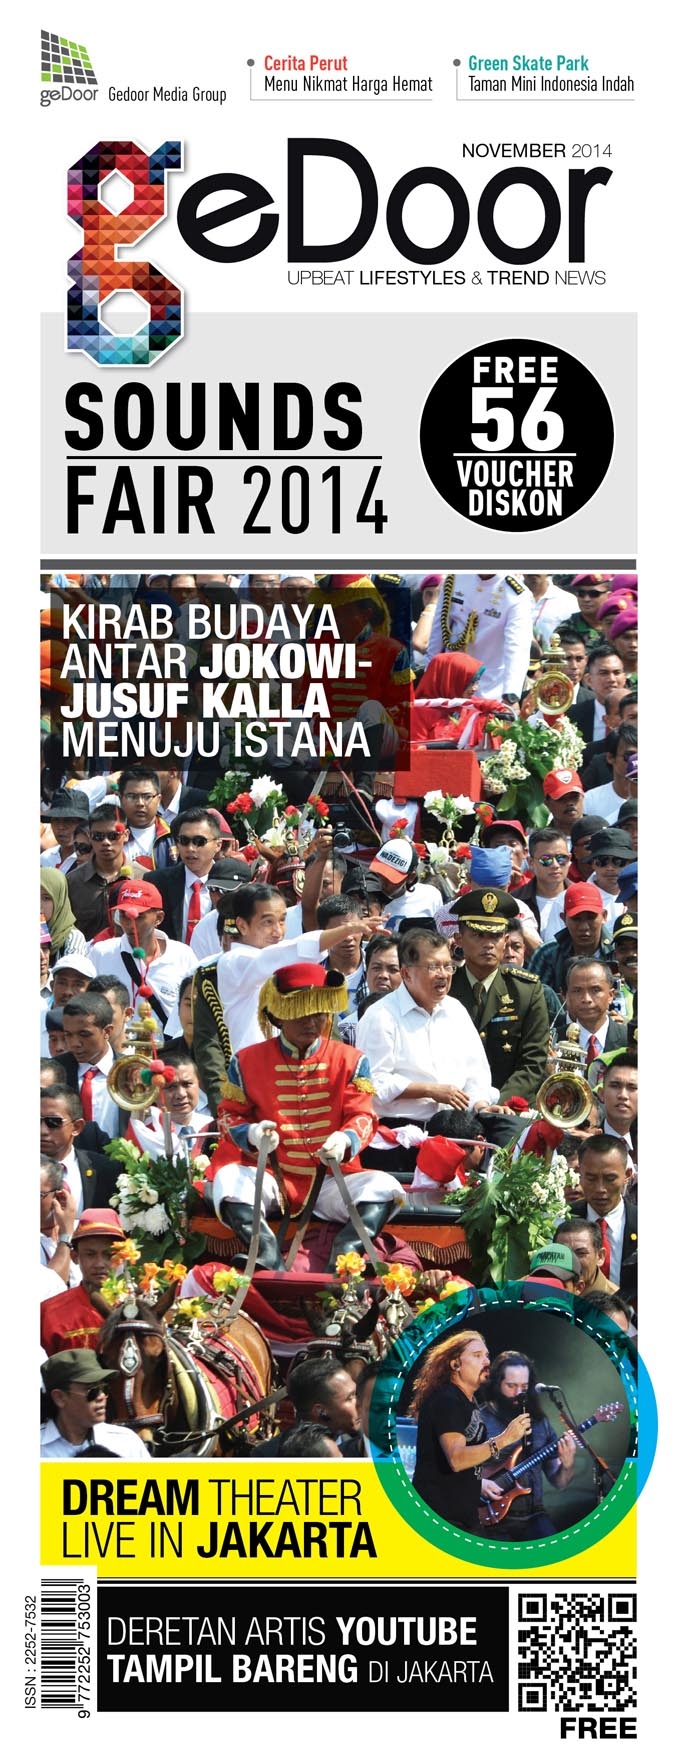 Kirab Budaya Antar Jokowi - Jusuf Kalla Menuju Istana